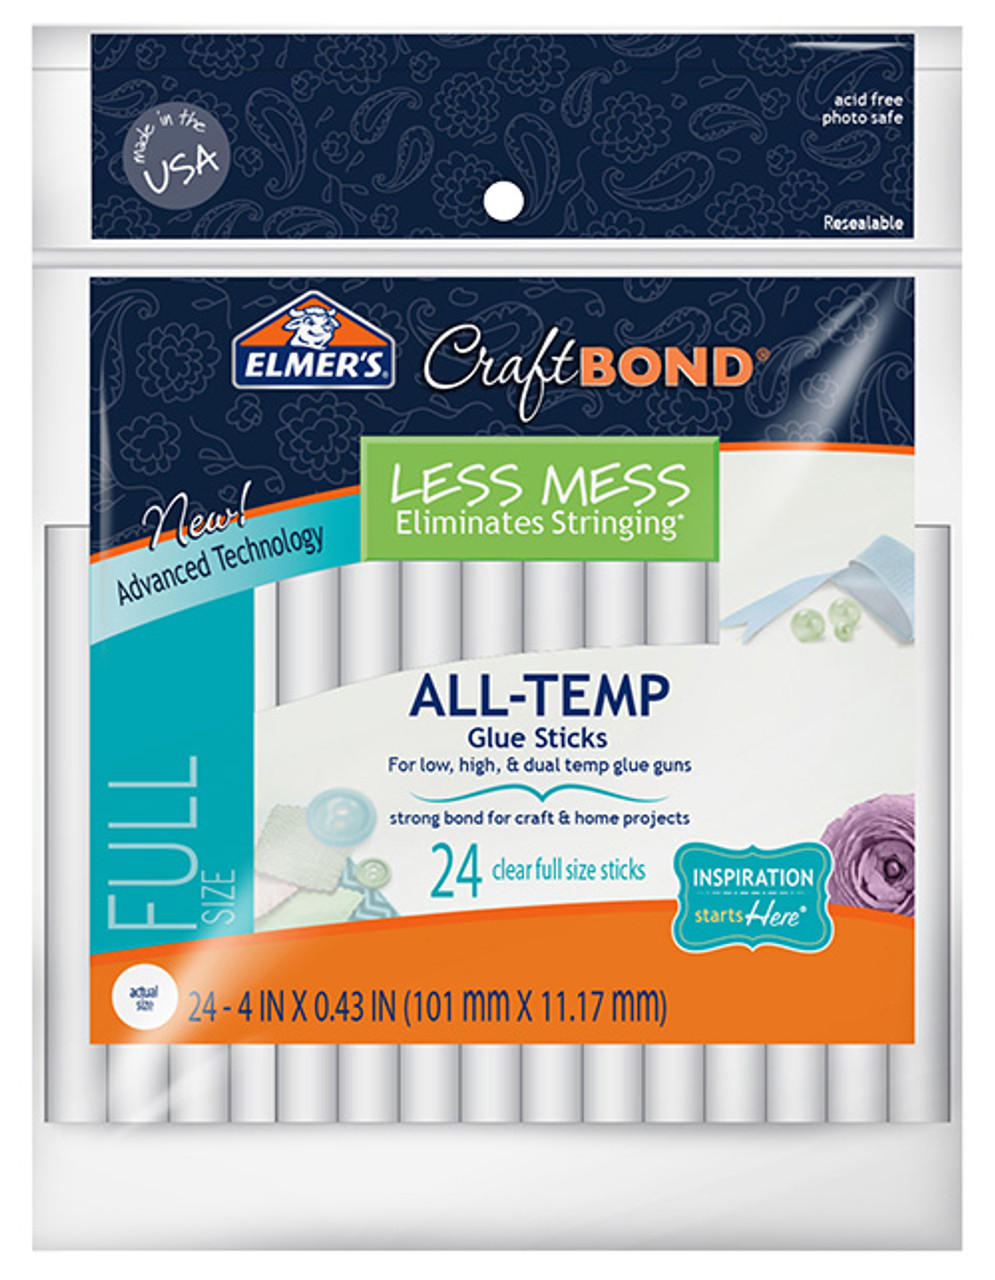 Elmer's CraftBond Less Mess All-Temp Glue Sticks - Each